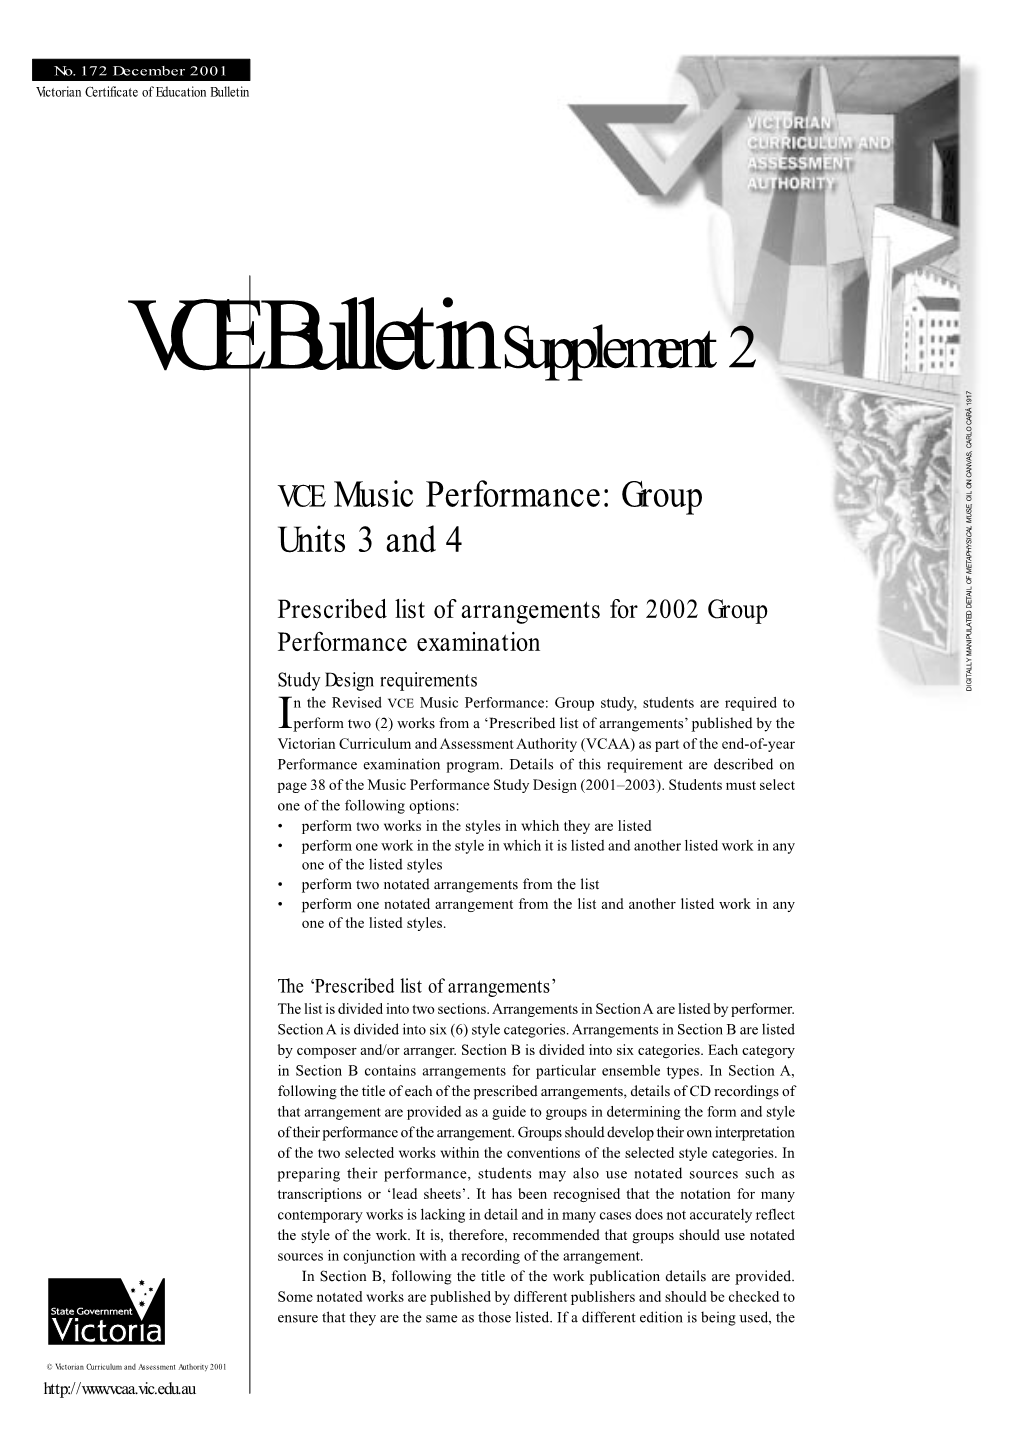 VCE Bulletin Supplement 2